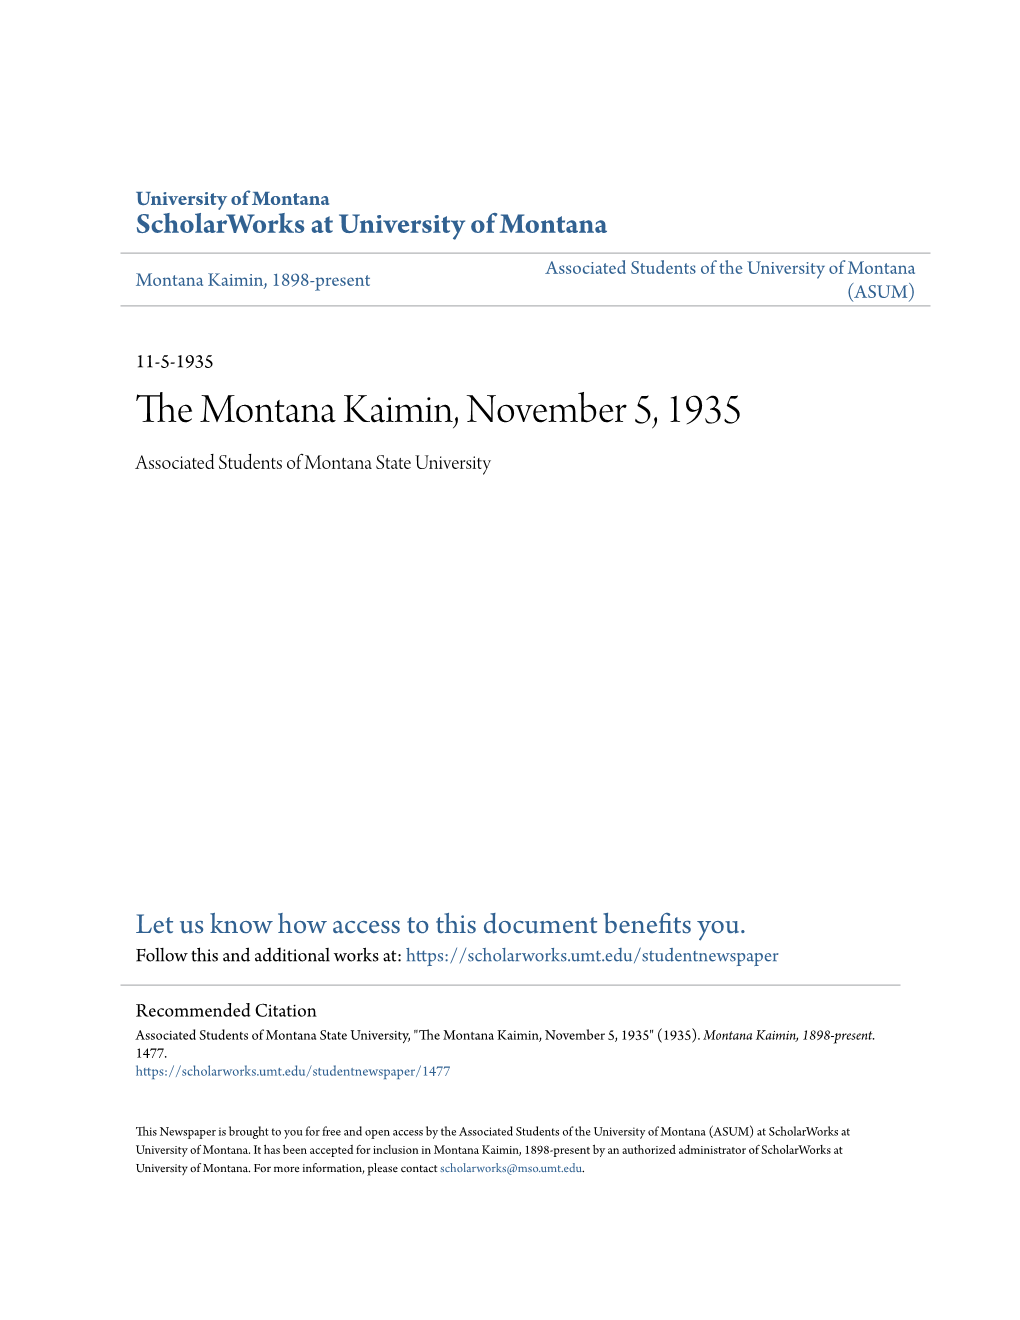 The Montana Kaimin, November 5, 1935